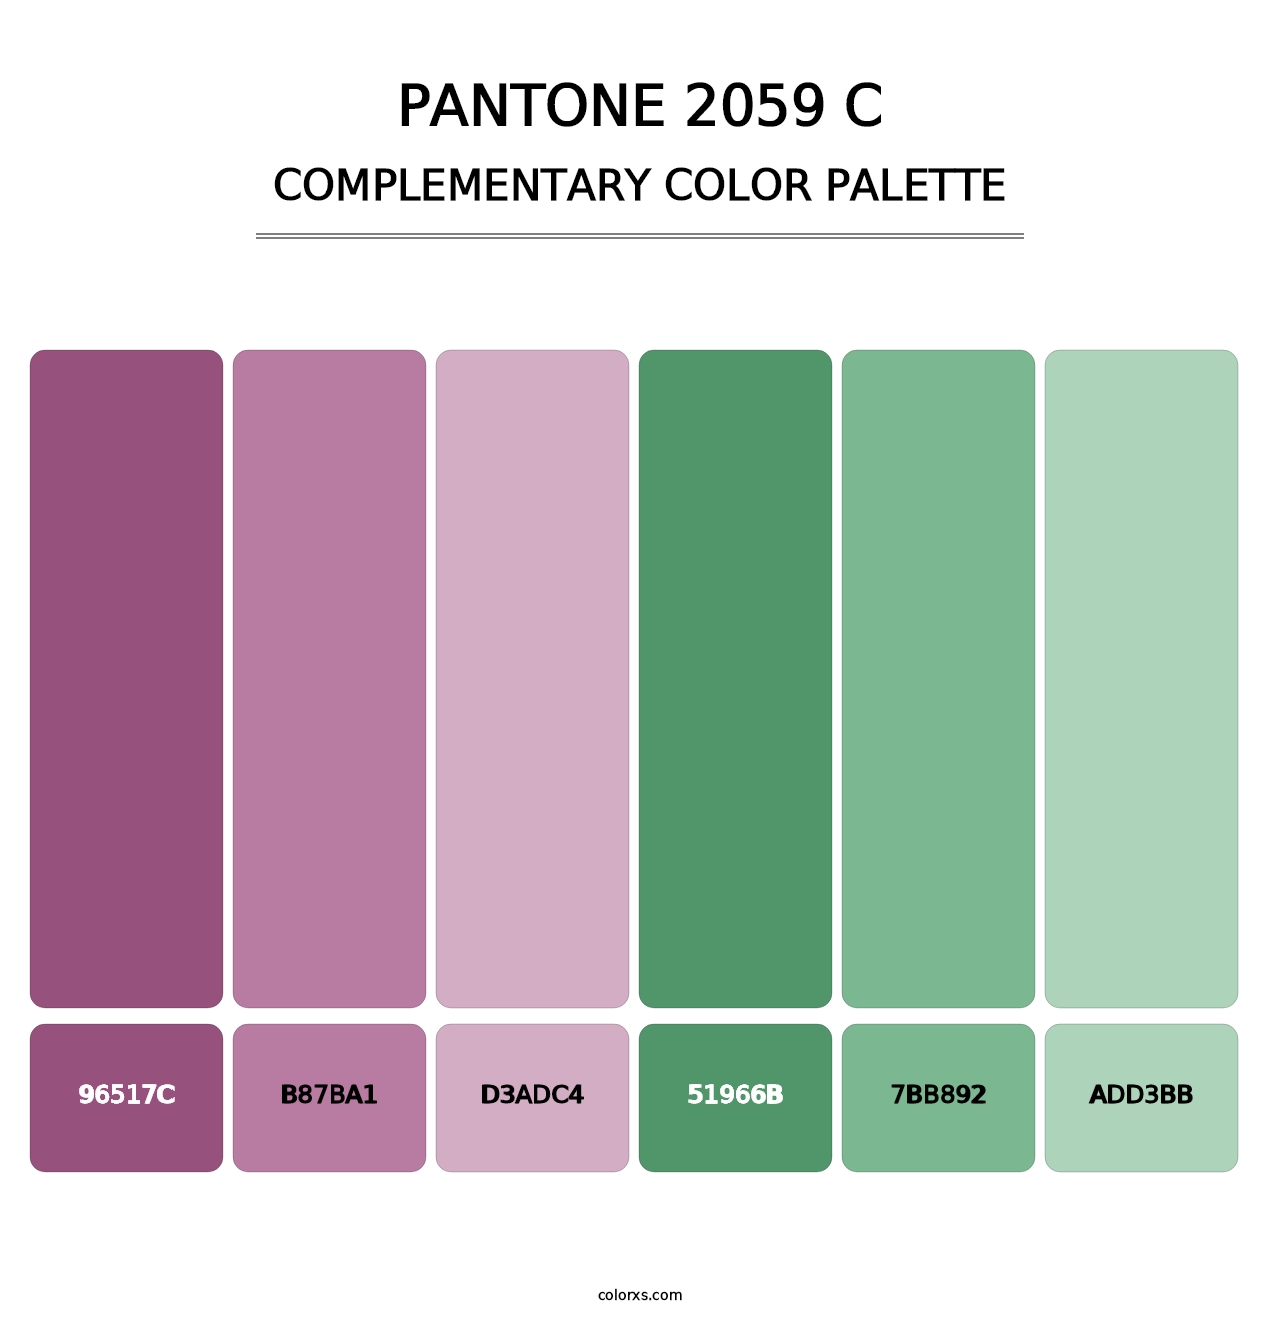 PANTONE 2059 C - Complementary Color Palette